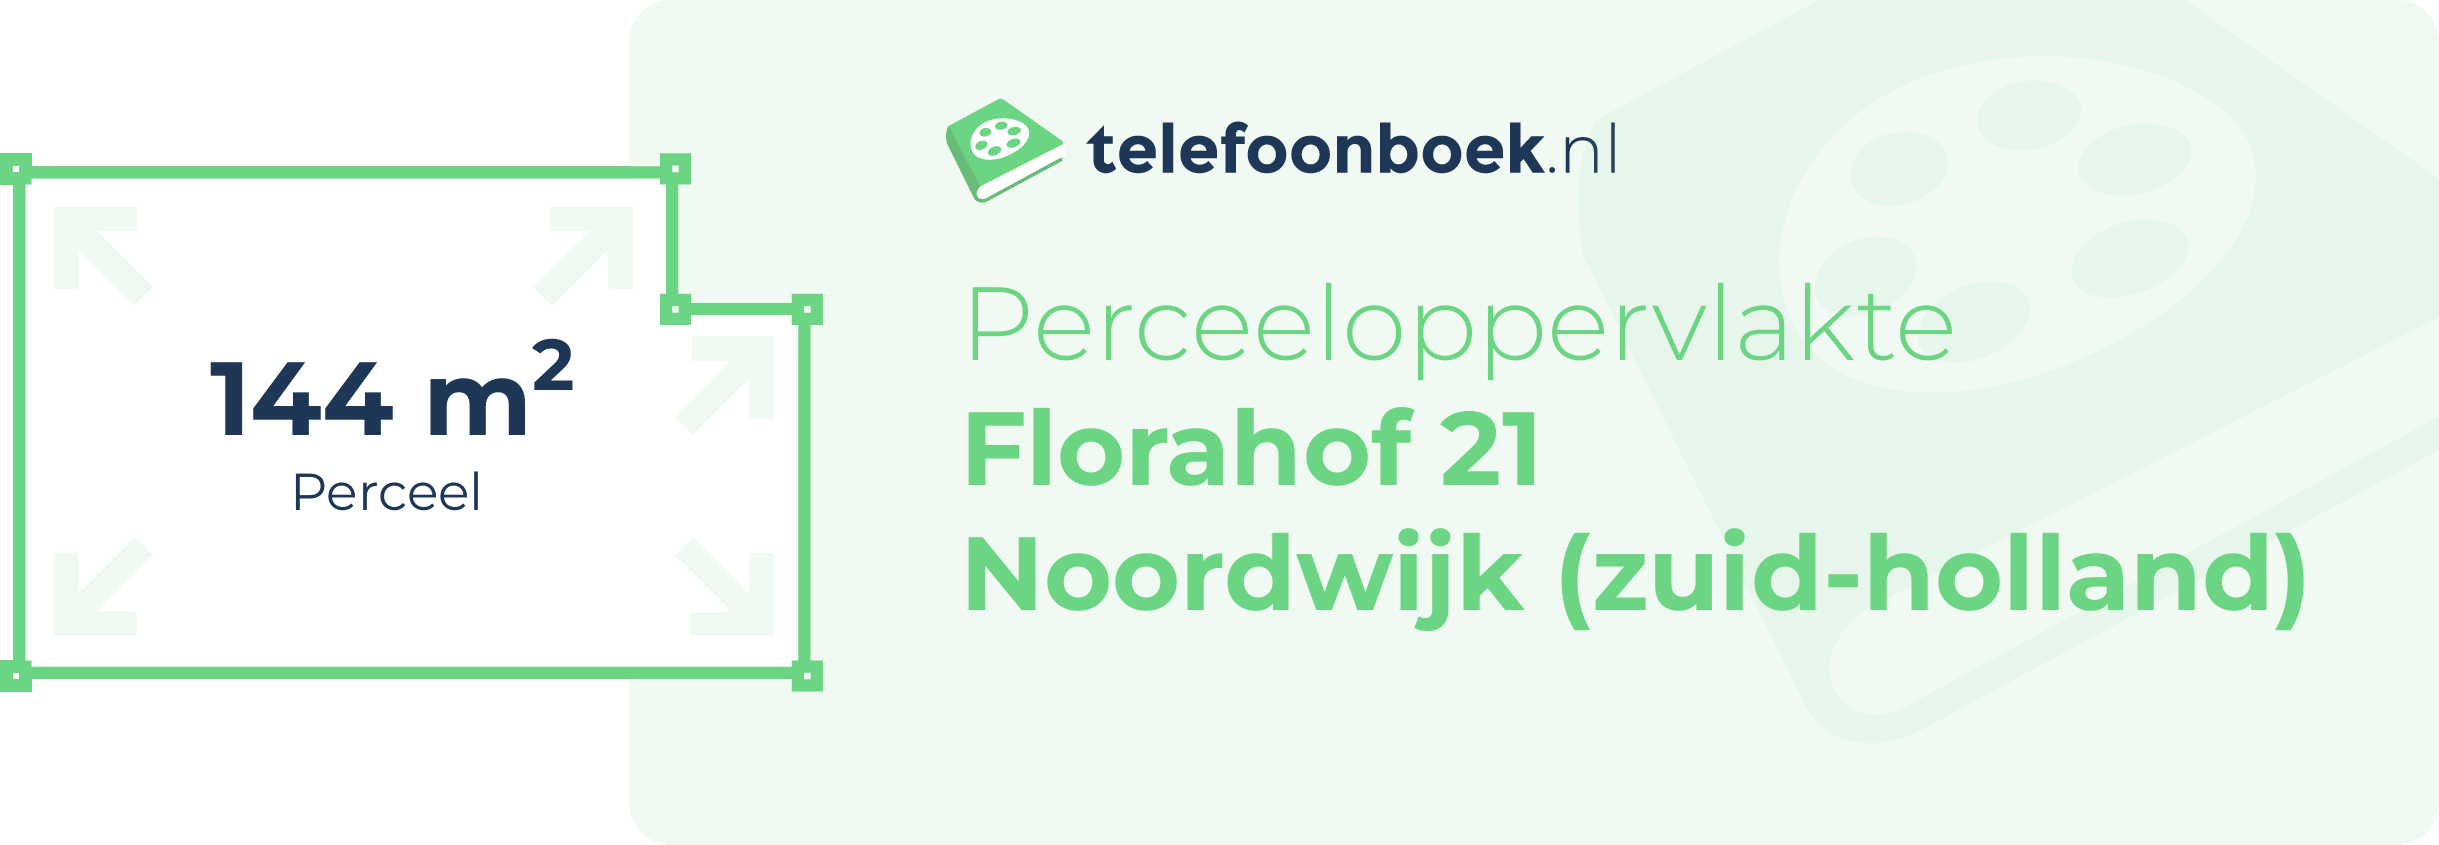 Perceeloppervlakte Florahof 21 Noordwijk (Zuid-Holland)